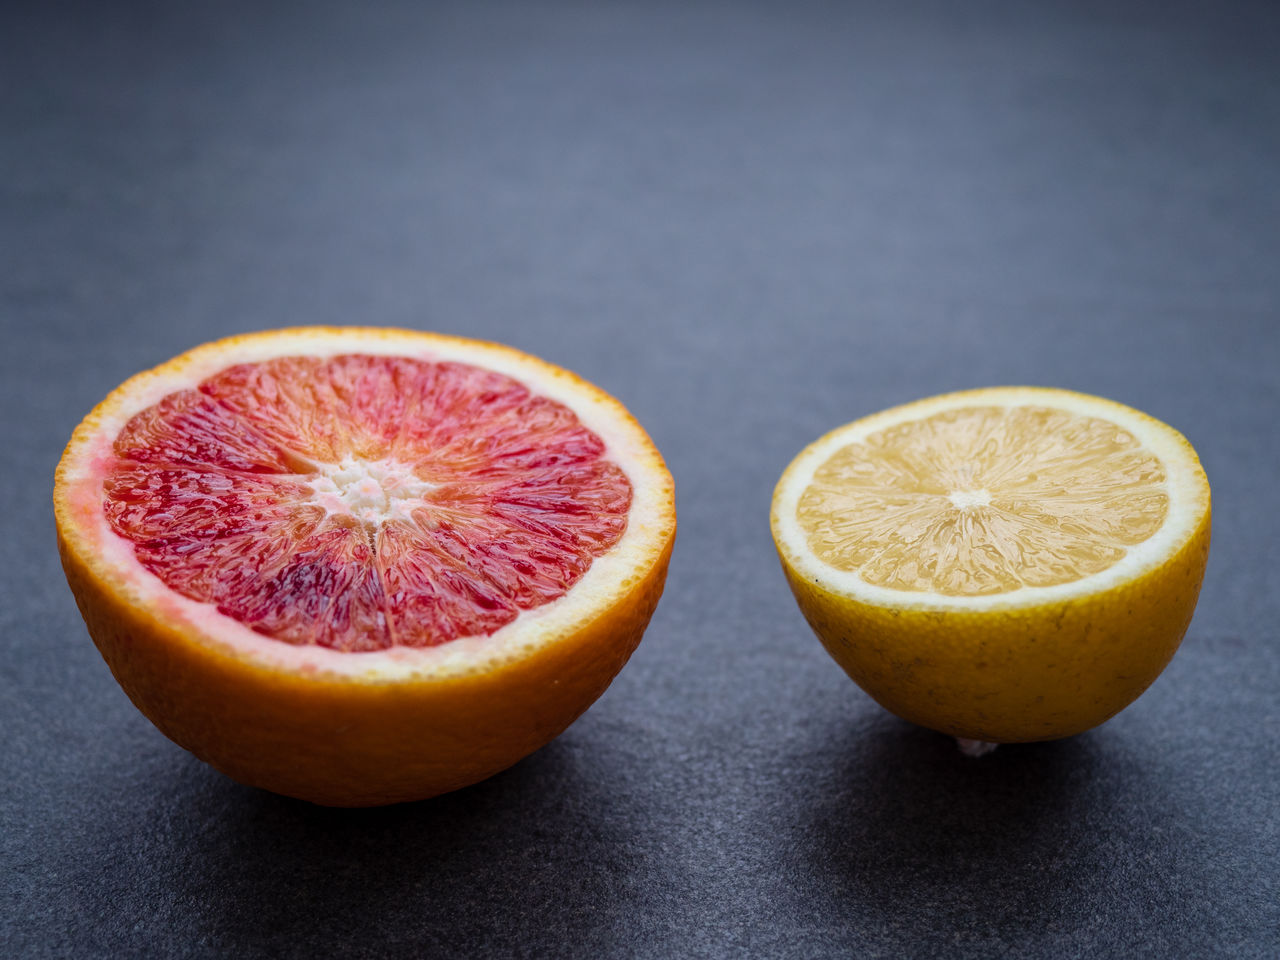 Halves of citrus fruits - orange and lemon